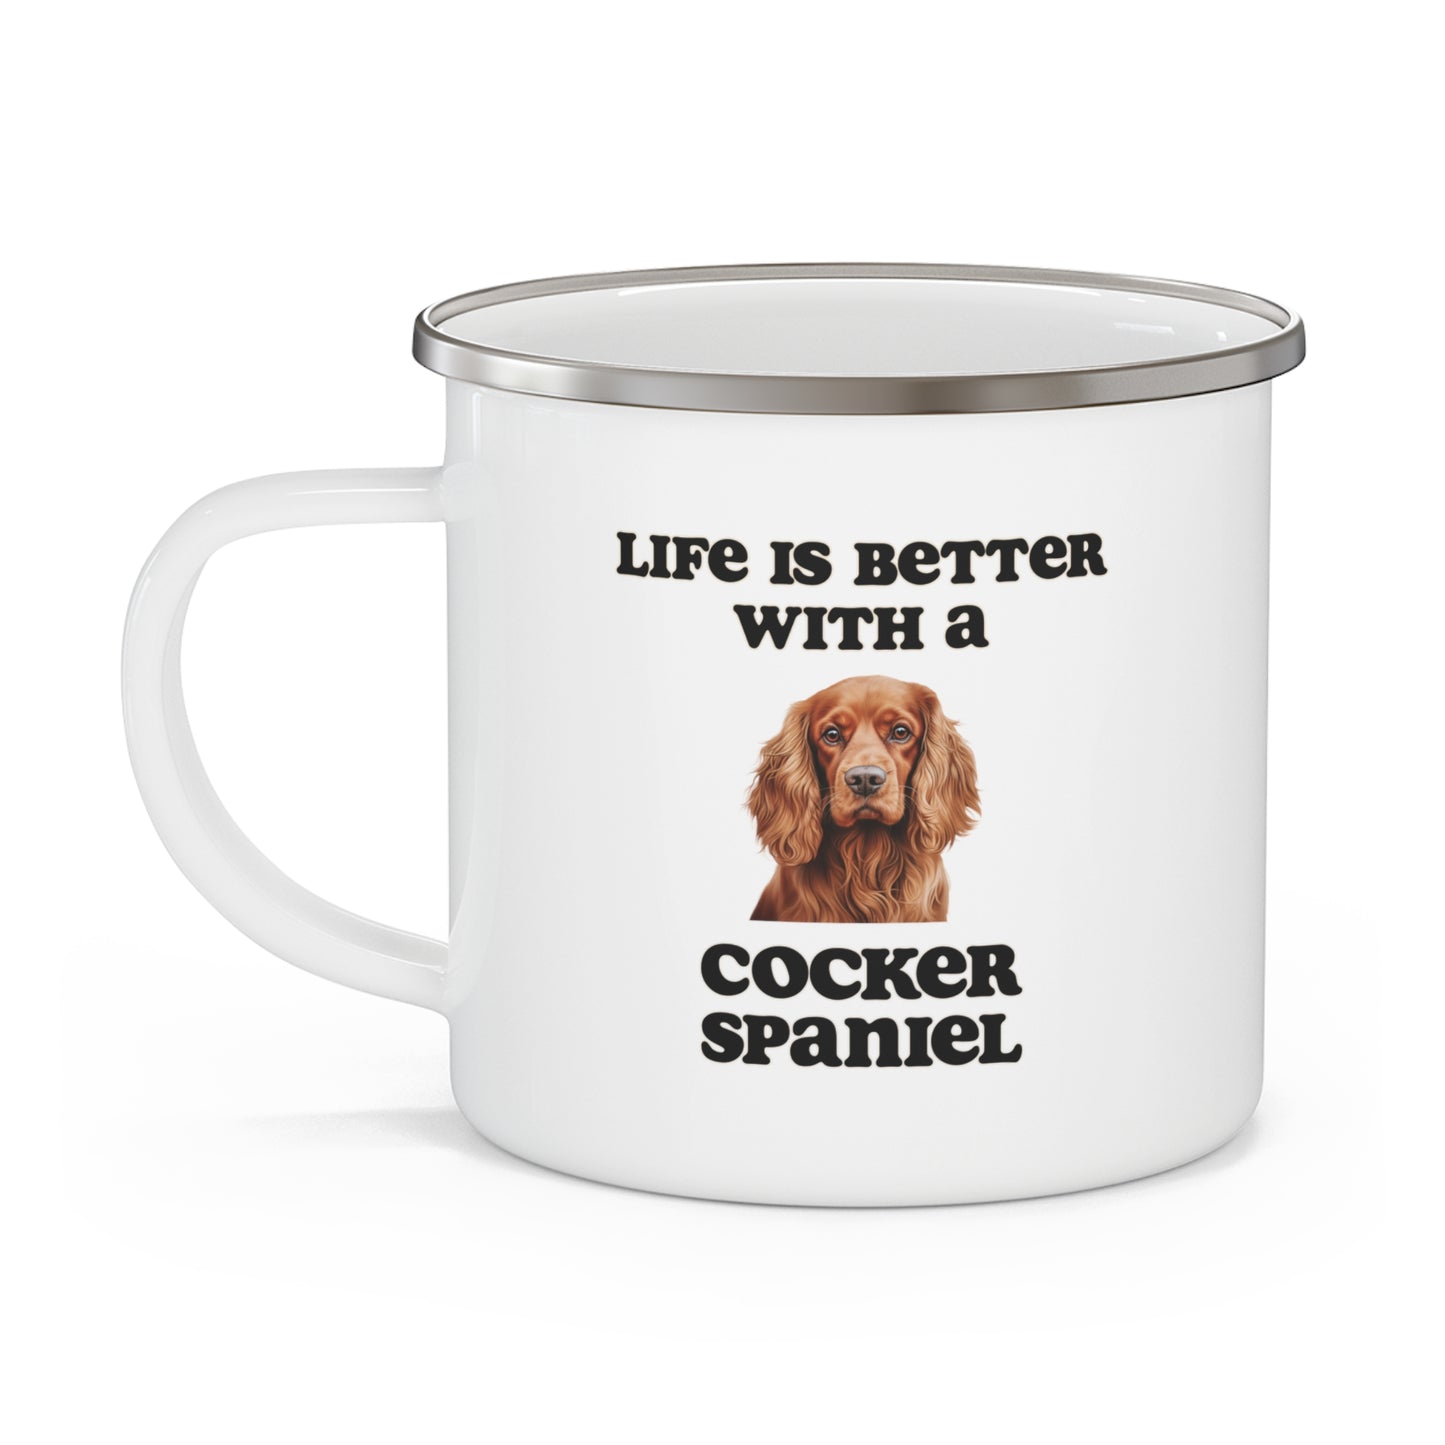 Cocker Spaniel Enamel Mug -  Life is Better with a Cocker Spaniel Camping Mug